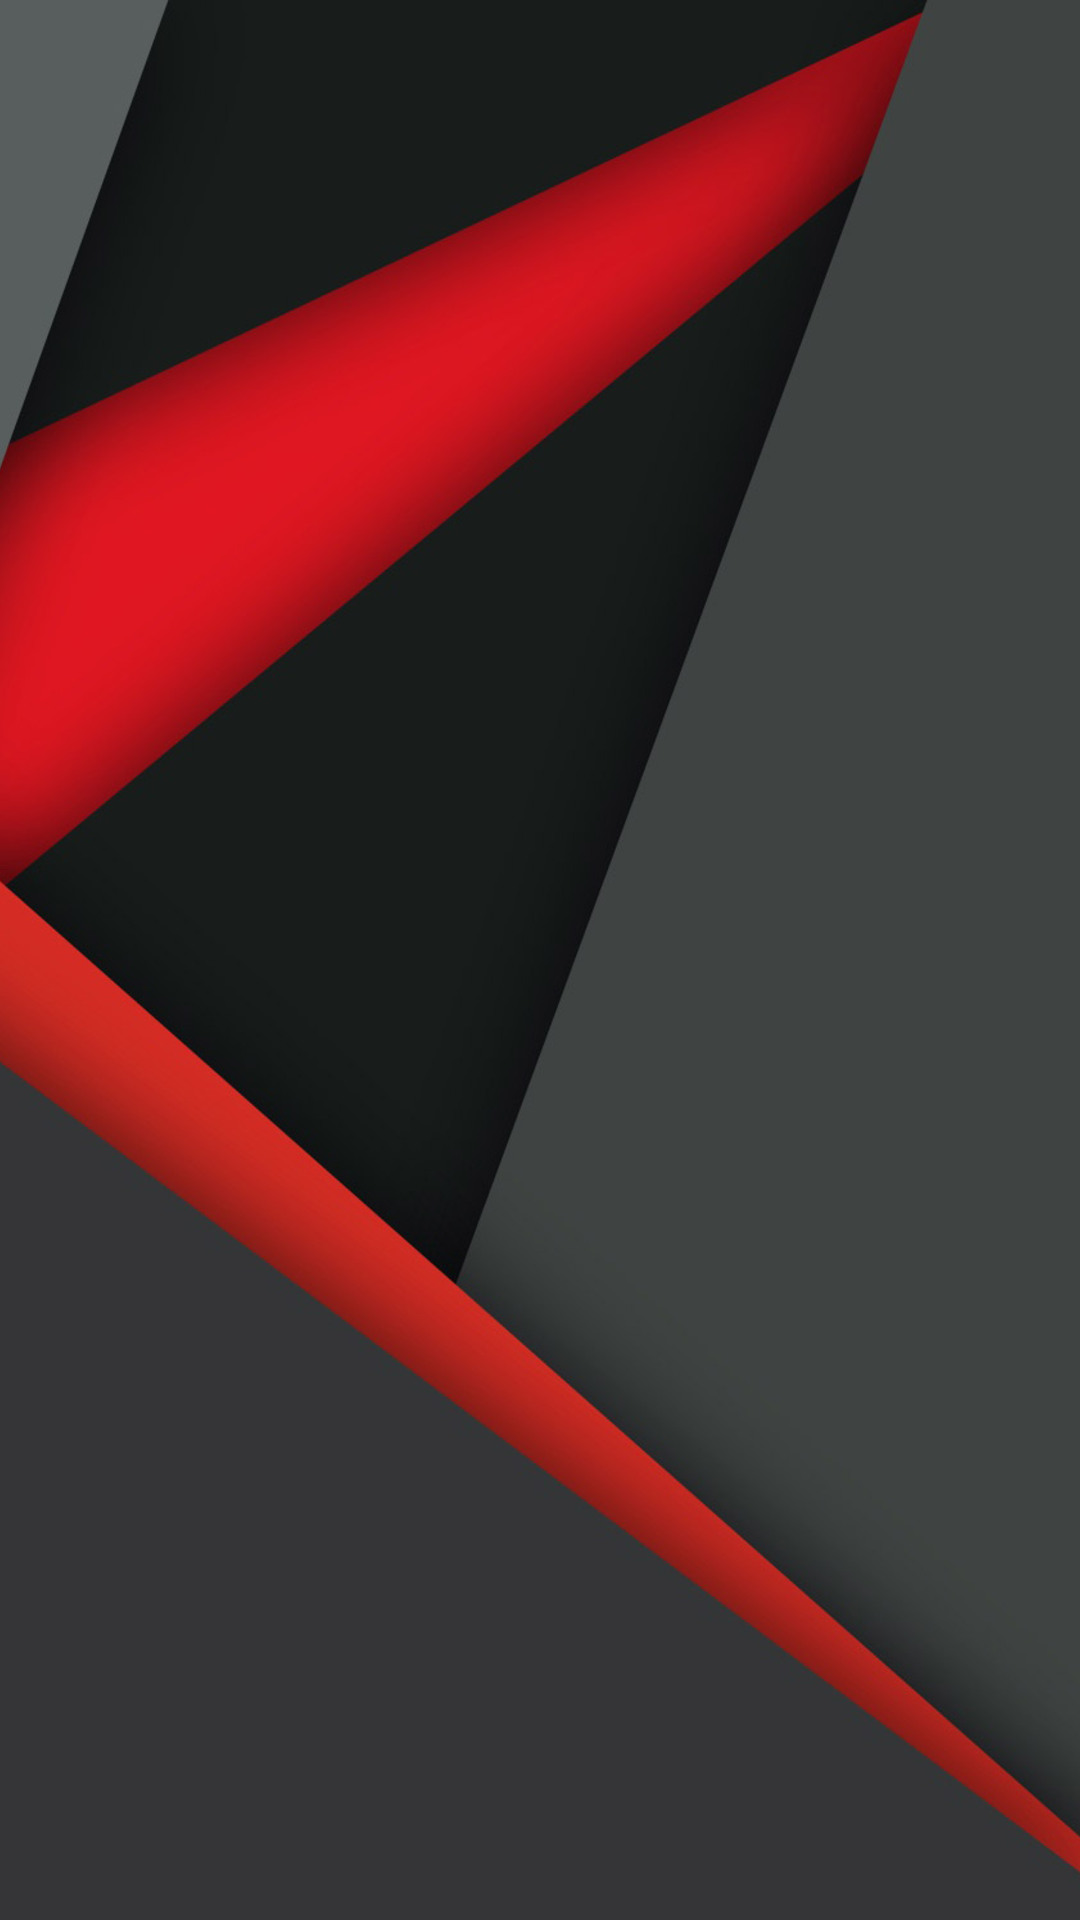 1080x1920 Material Design Dark Red  Black  Iphone 7 6s 6 